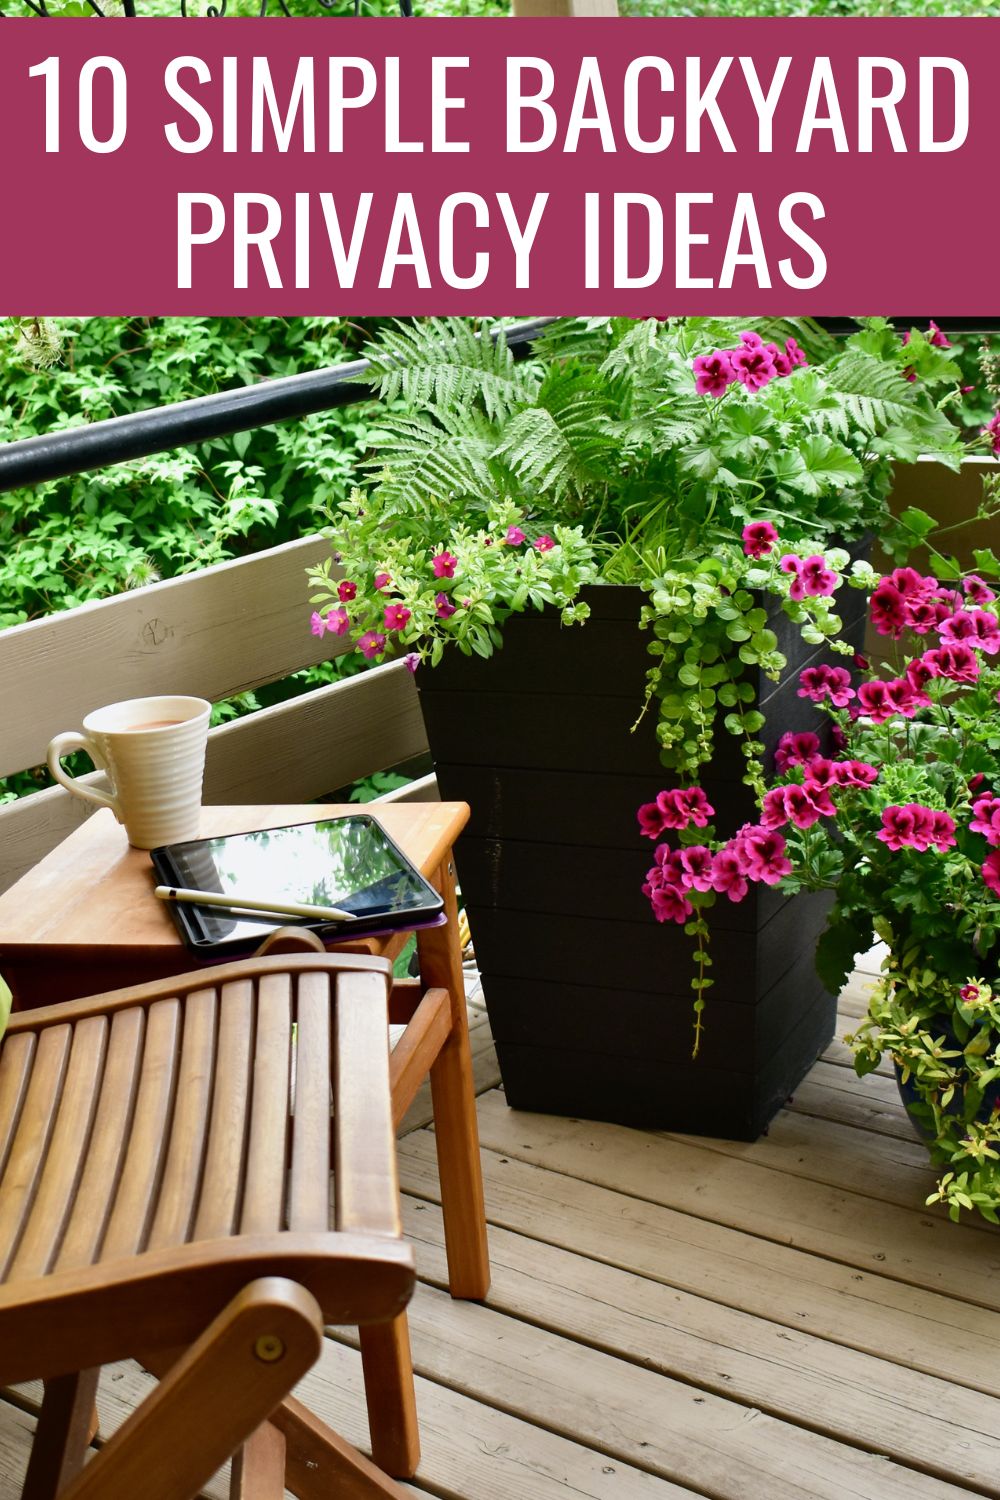 10 simple backyard privacy ideas.